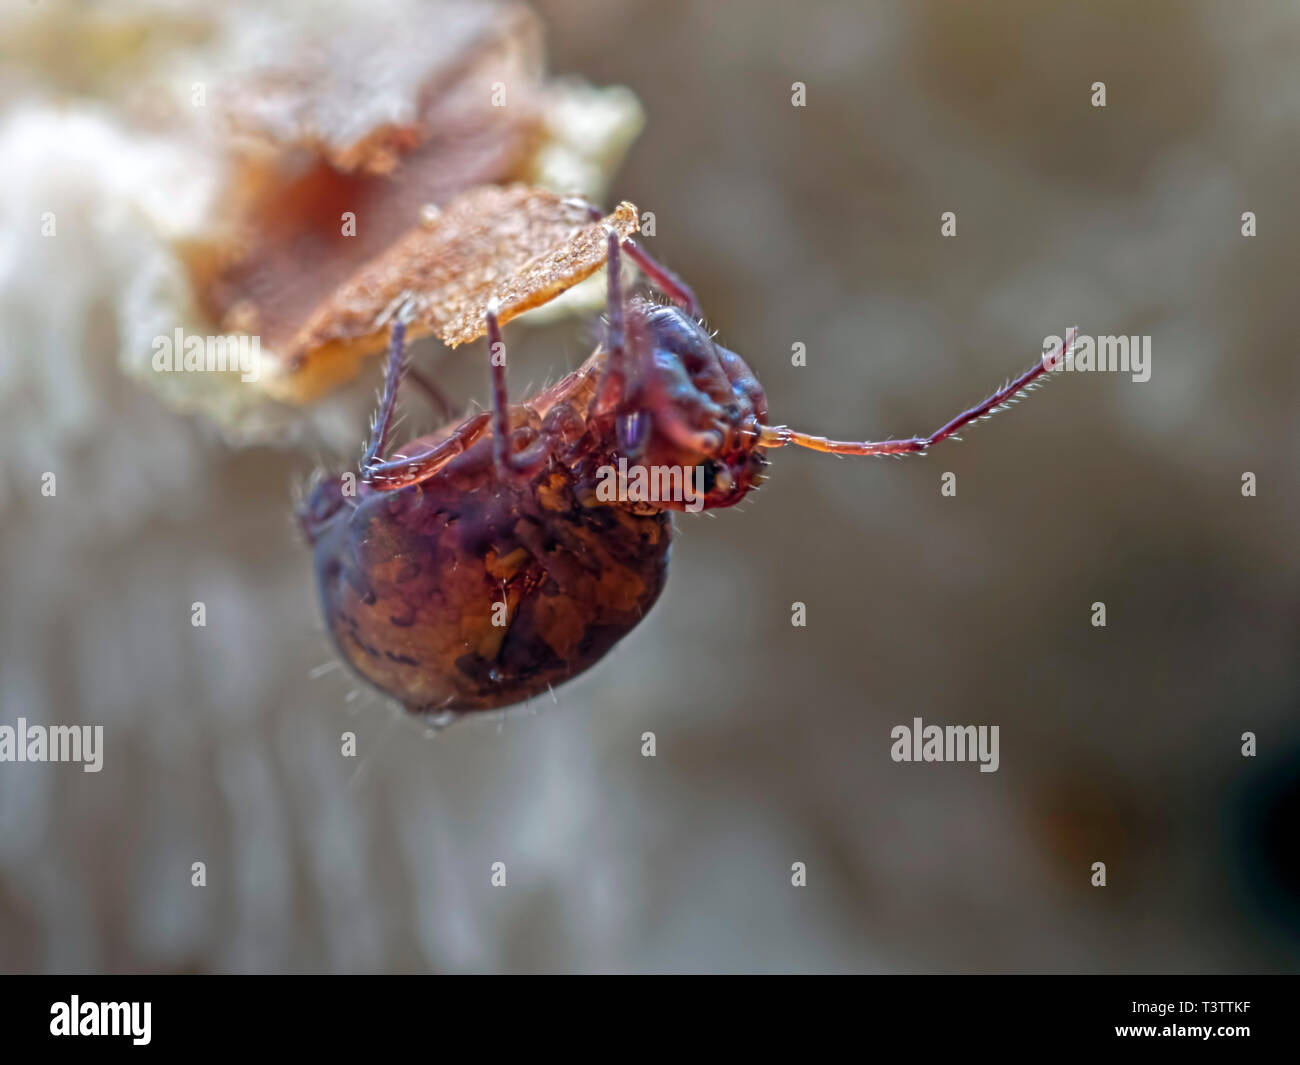 A Dicyrtoma fusca globular springtail walking upside down along a sliver of wood. Stock Photo